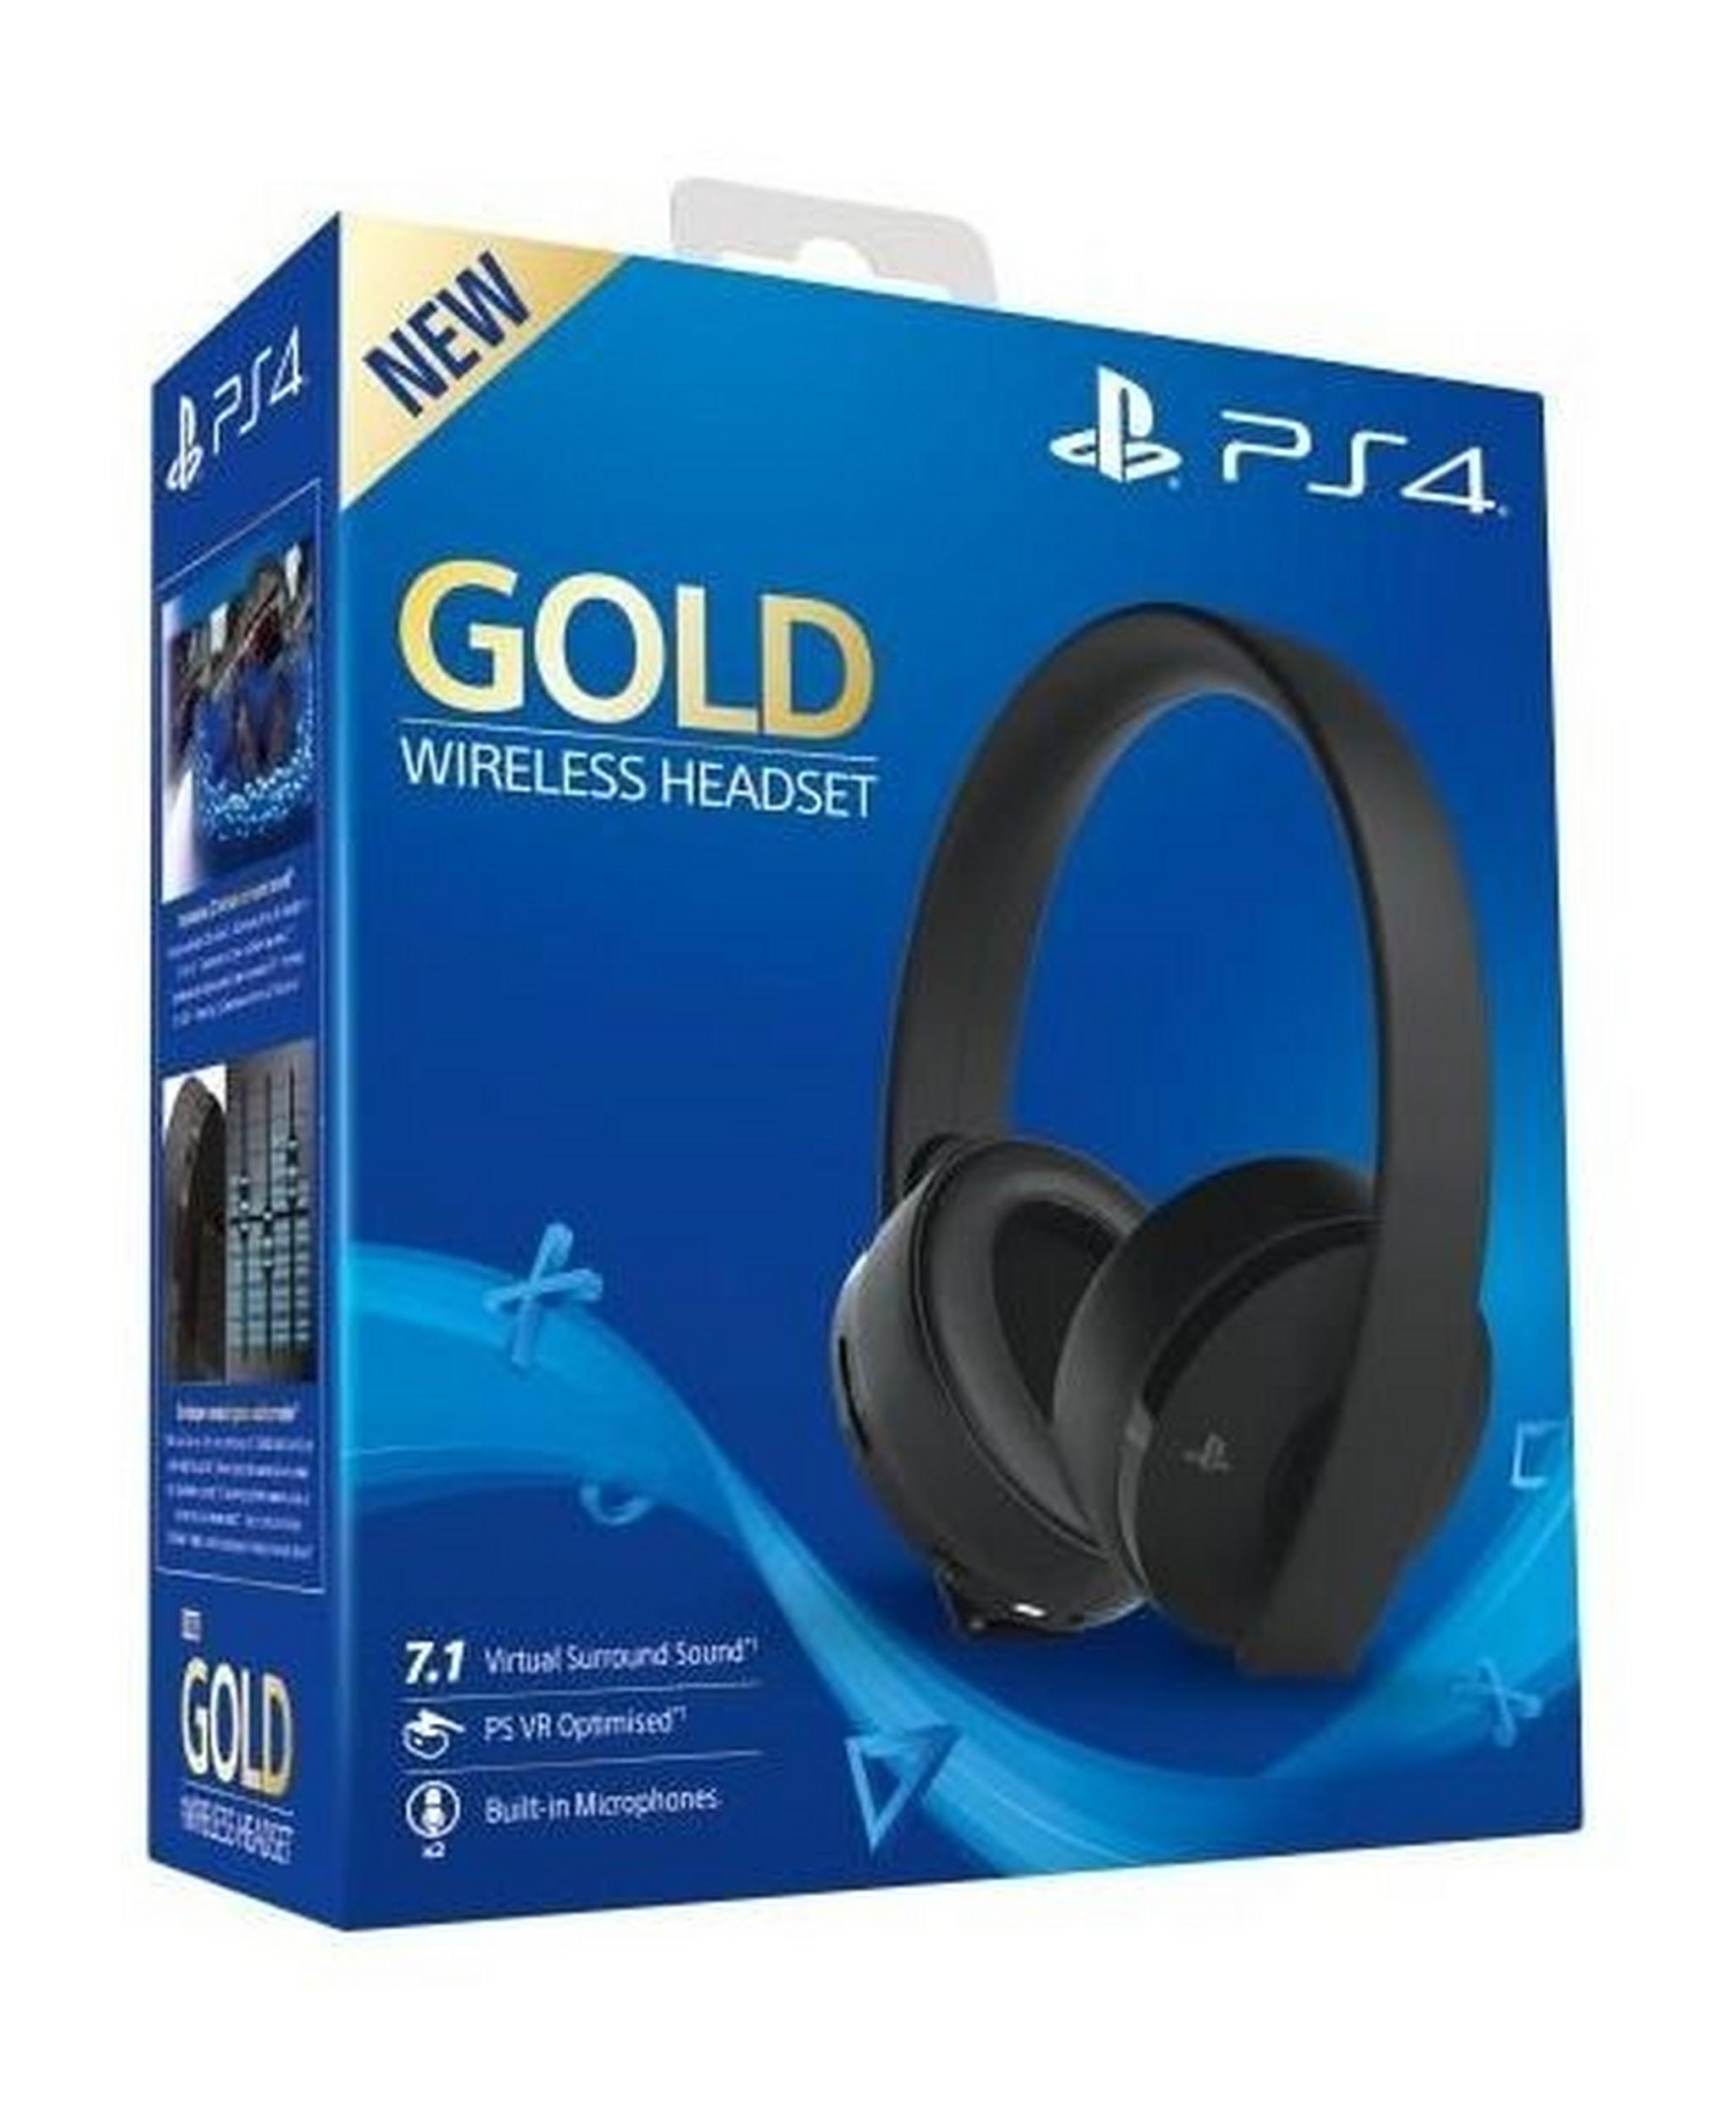 Sony PlayStation Gold Wireless Headset (CUHYA-0080) - Black